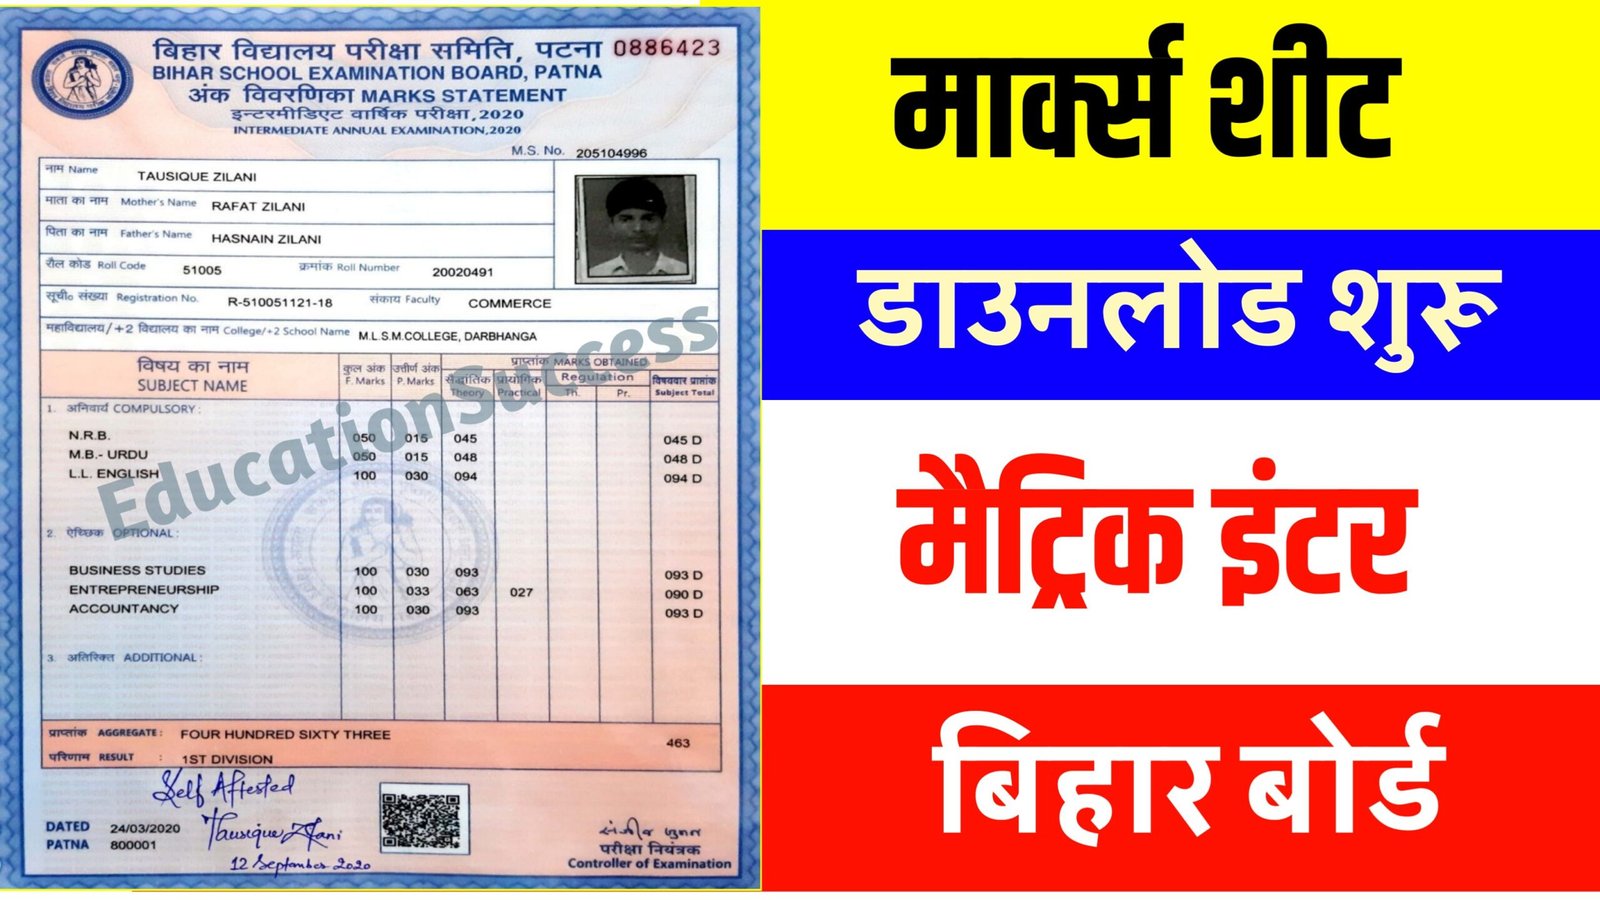 Bihar Board Matric Inter Original Marksheet Download Now: